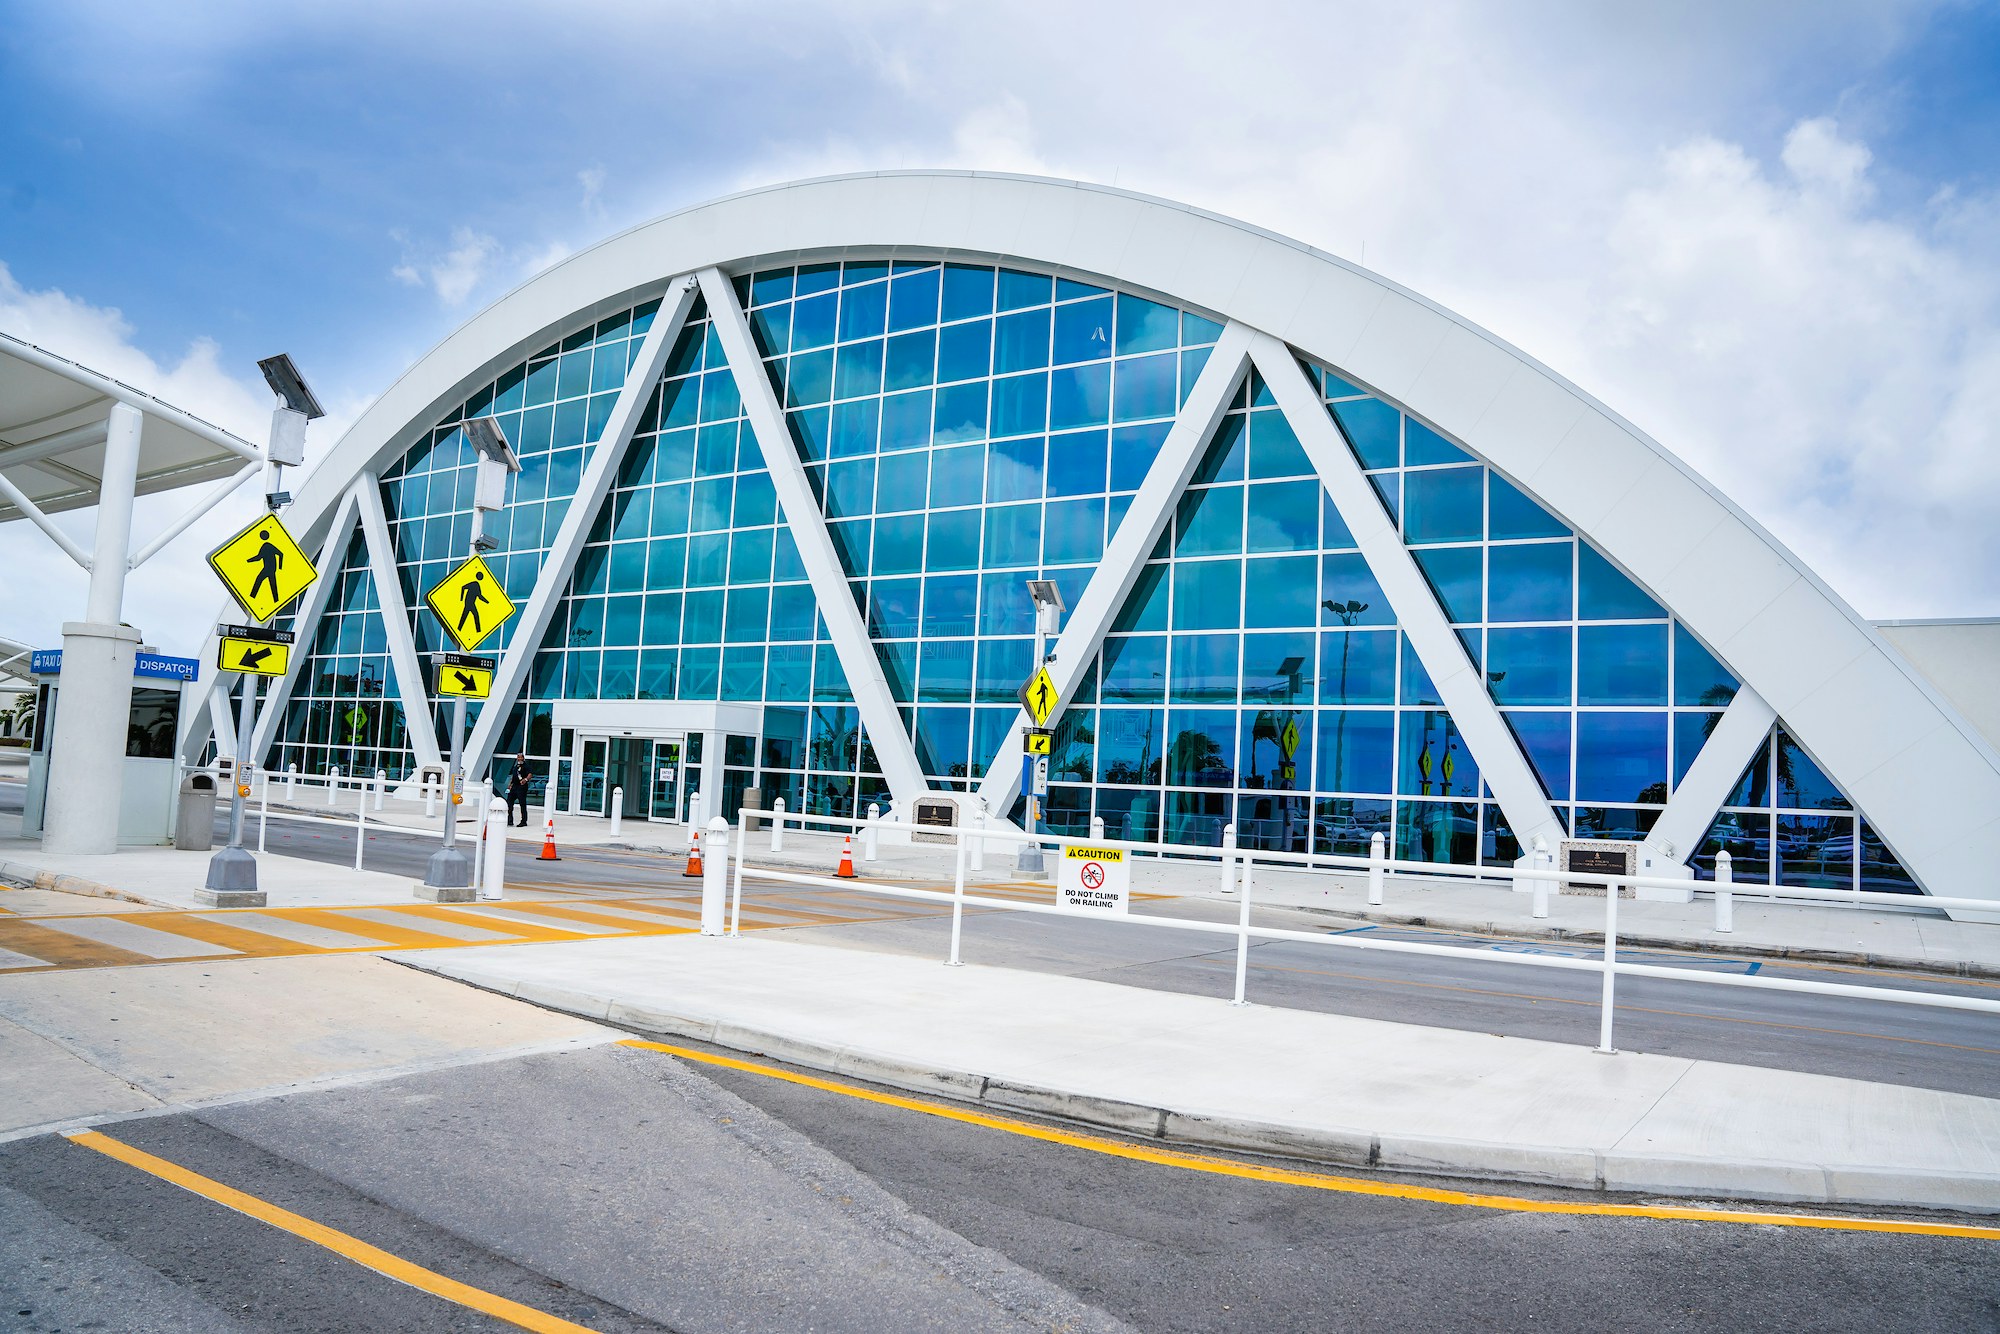 Owen roberts international airport terminal